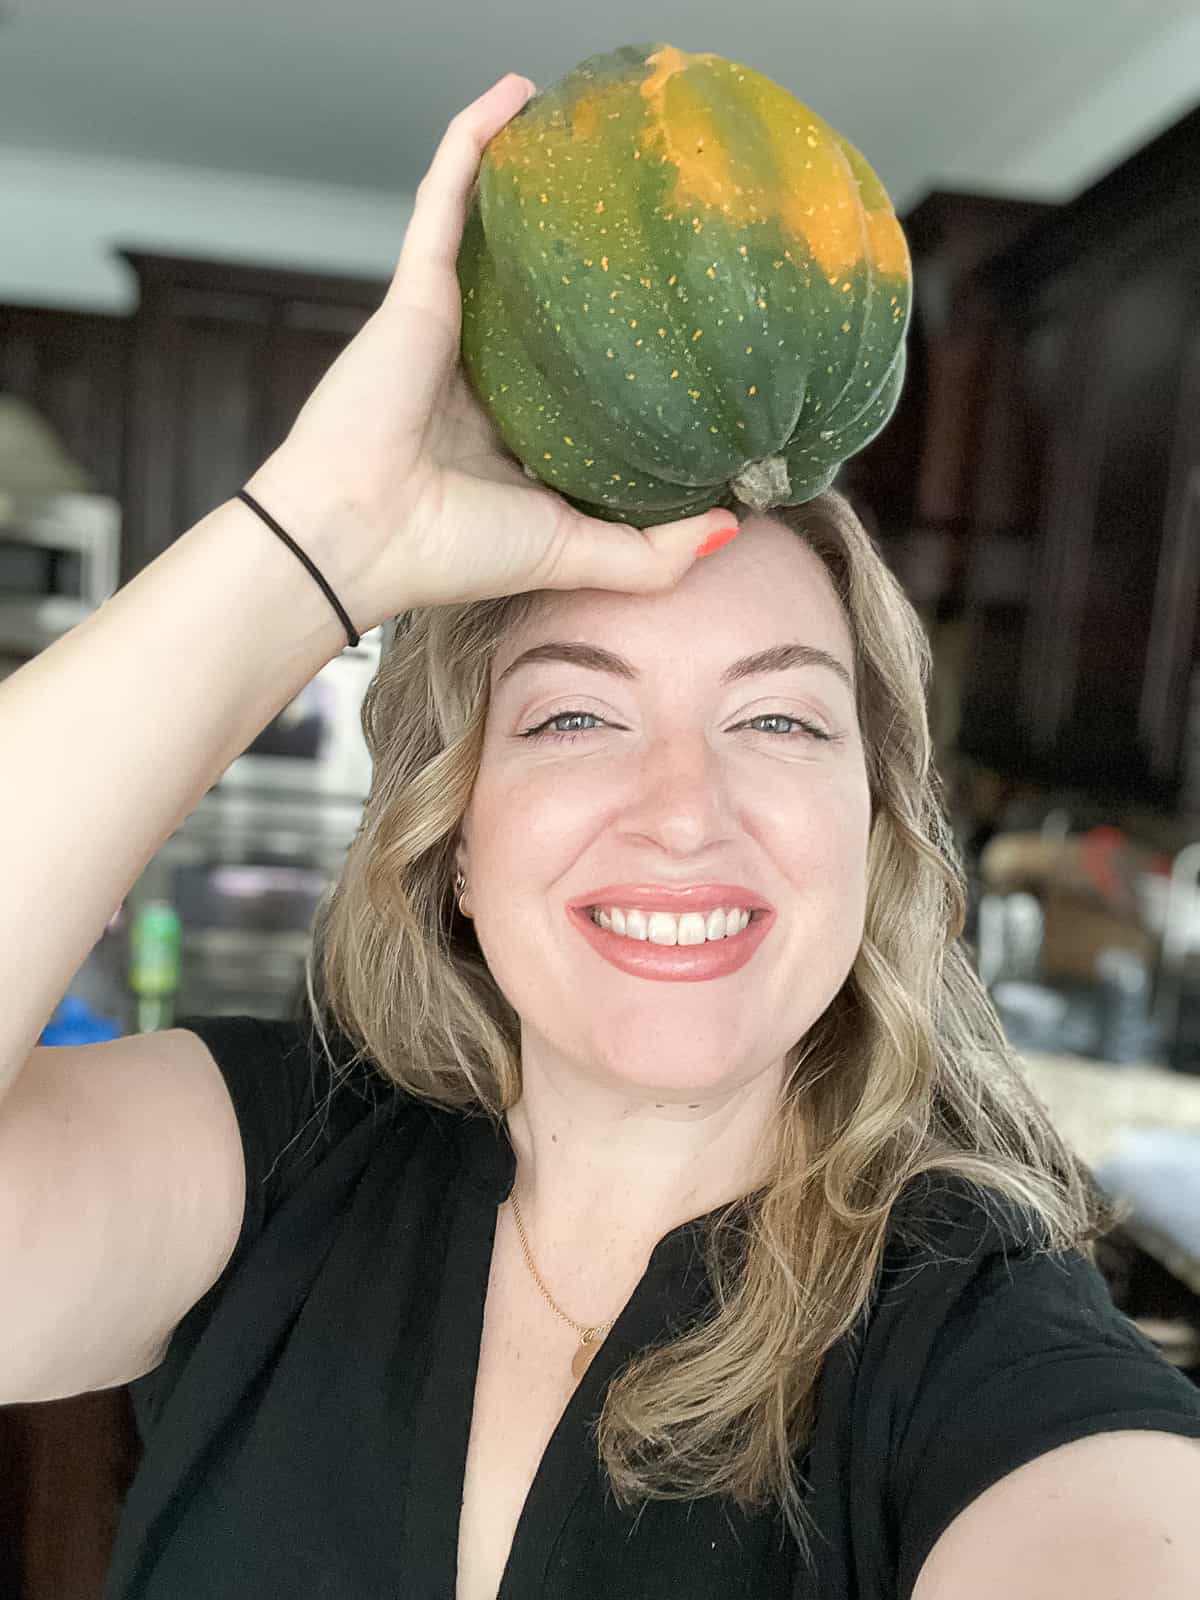 Jenna Passaro Food Blogger from Sip Bite Go holding acorn squash